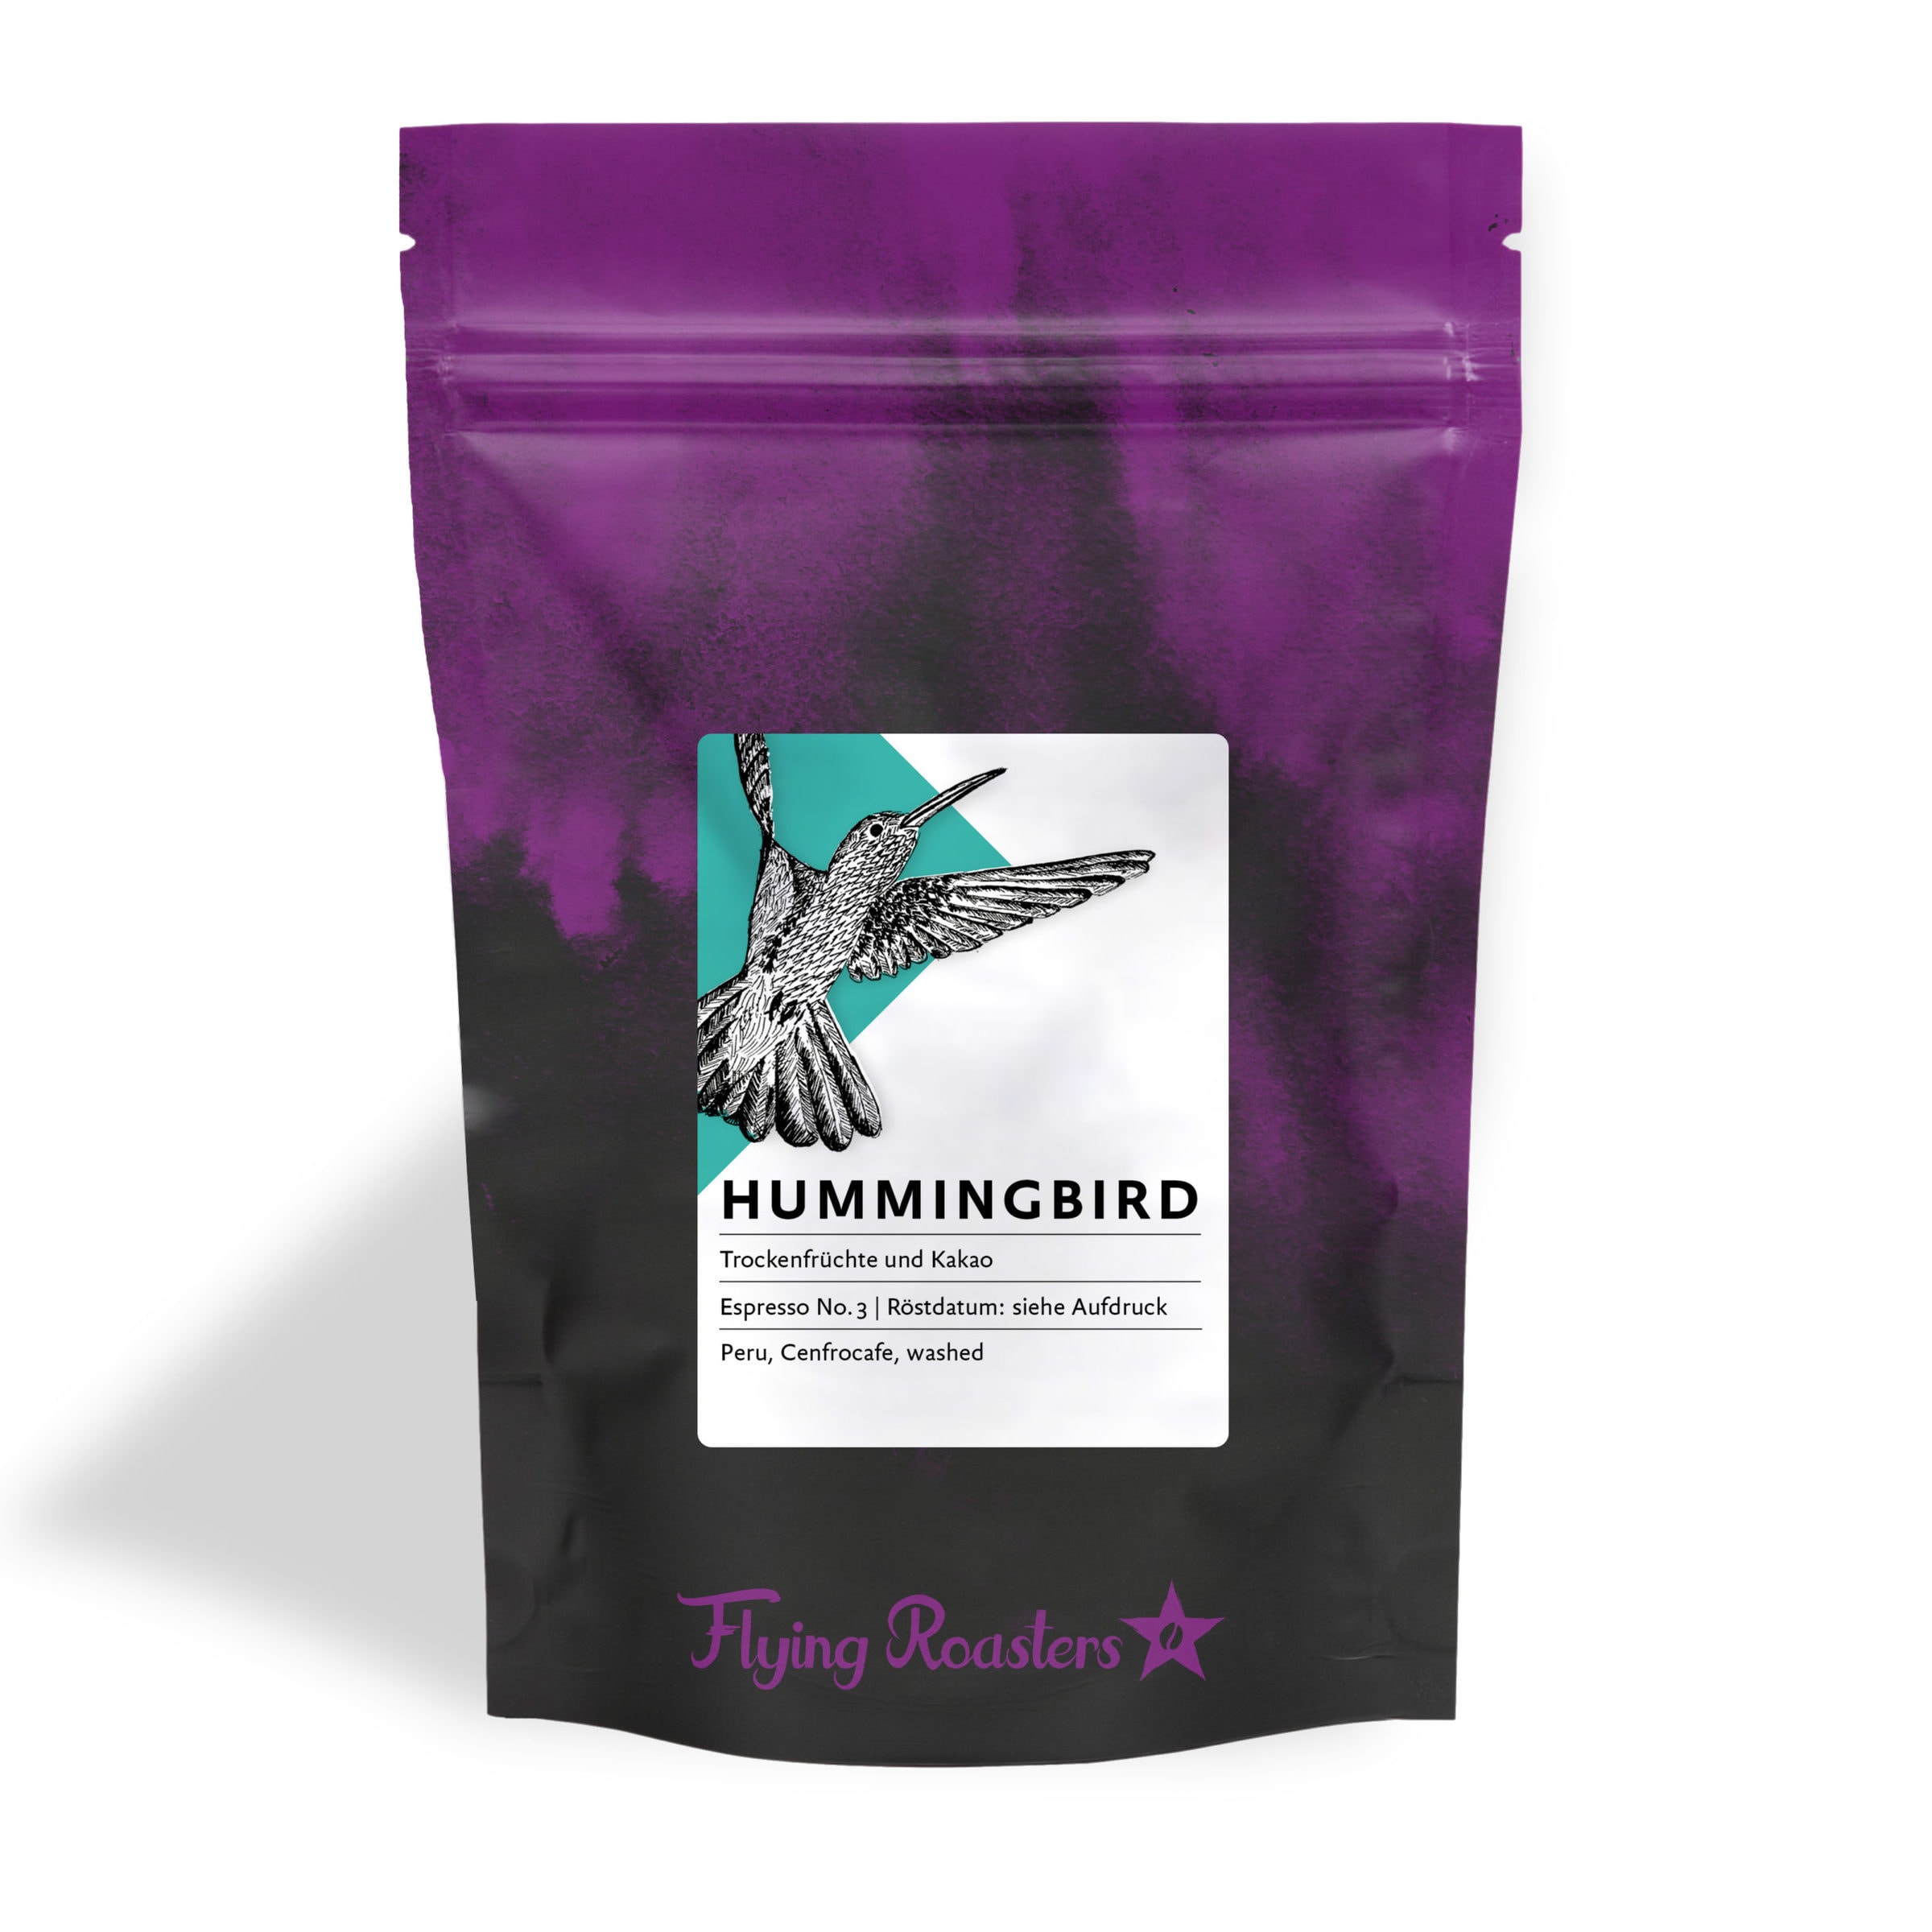 Kaffeetüte für schokoladigen Espresso Hummingbird aus Peru